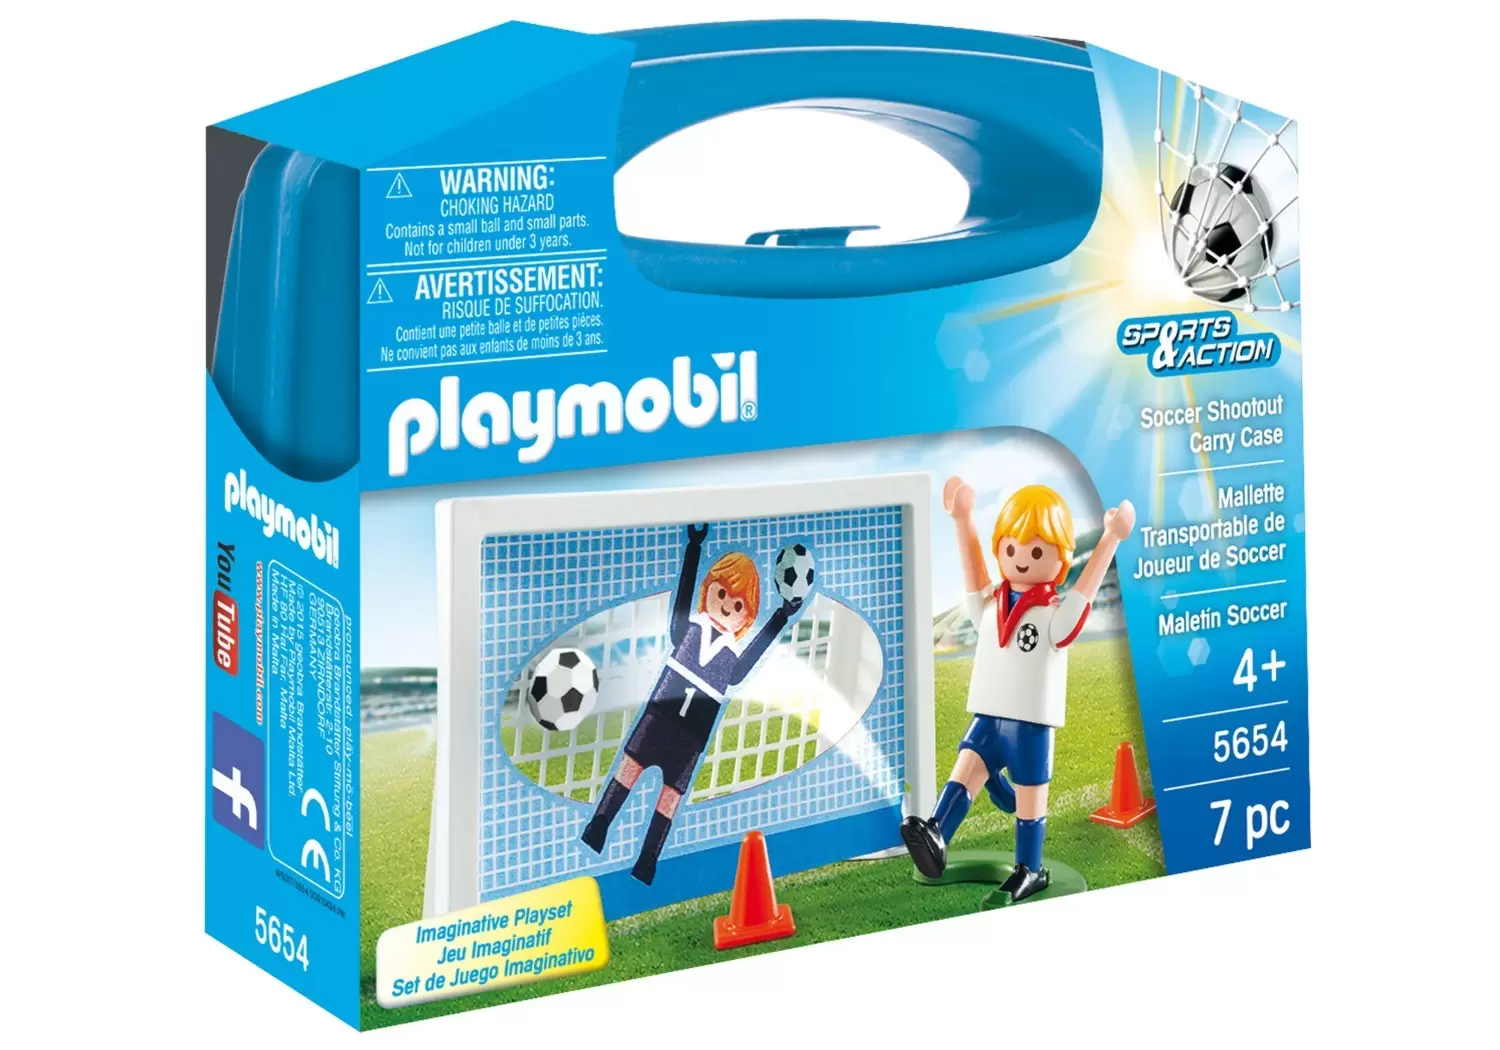 Playmobil Soccer - Soccer Shootout Carry Case